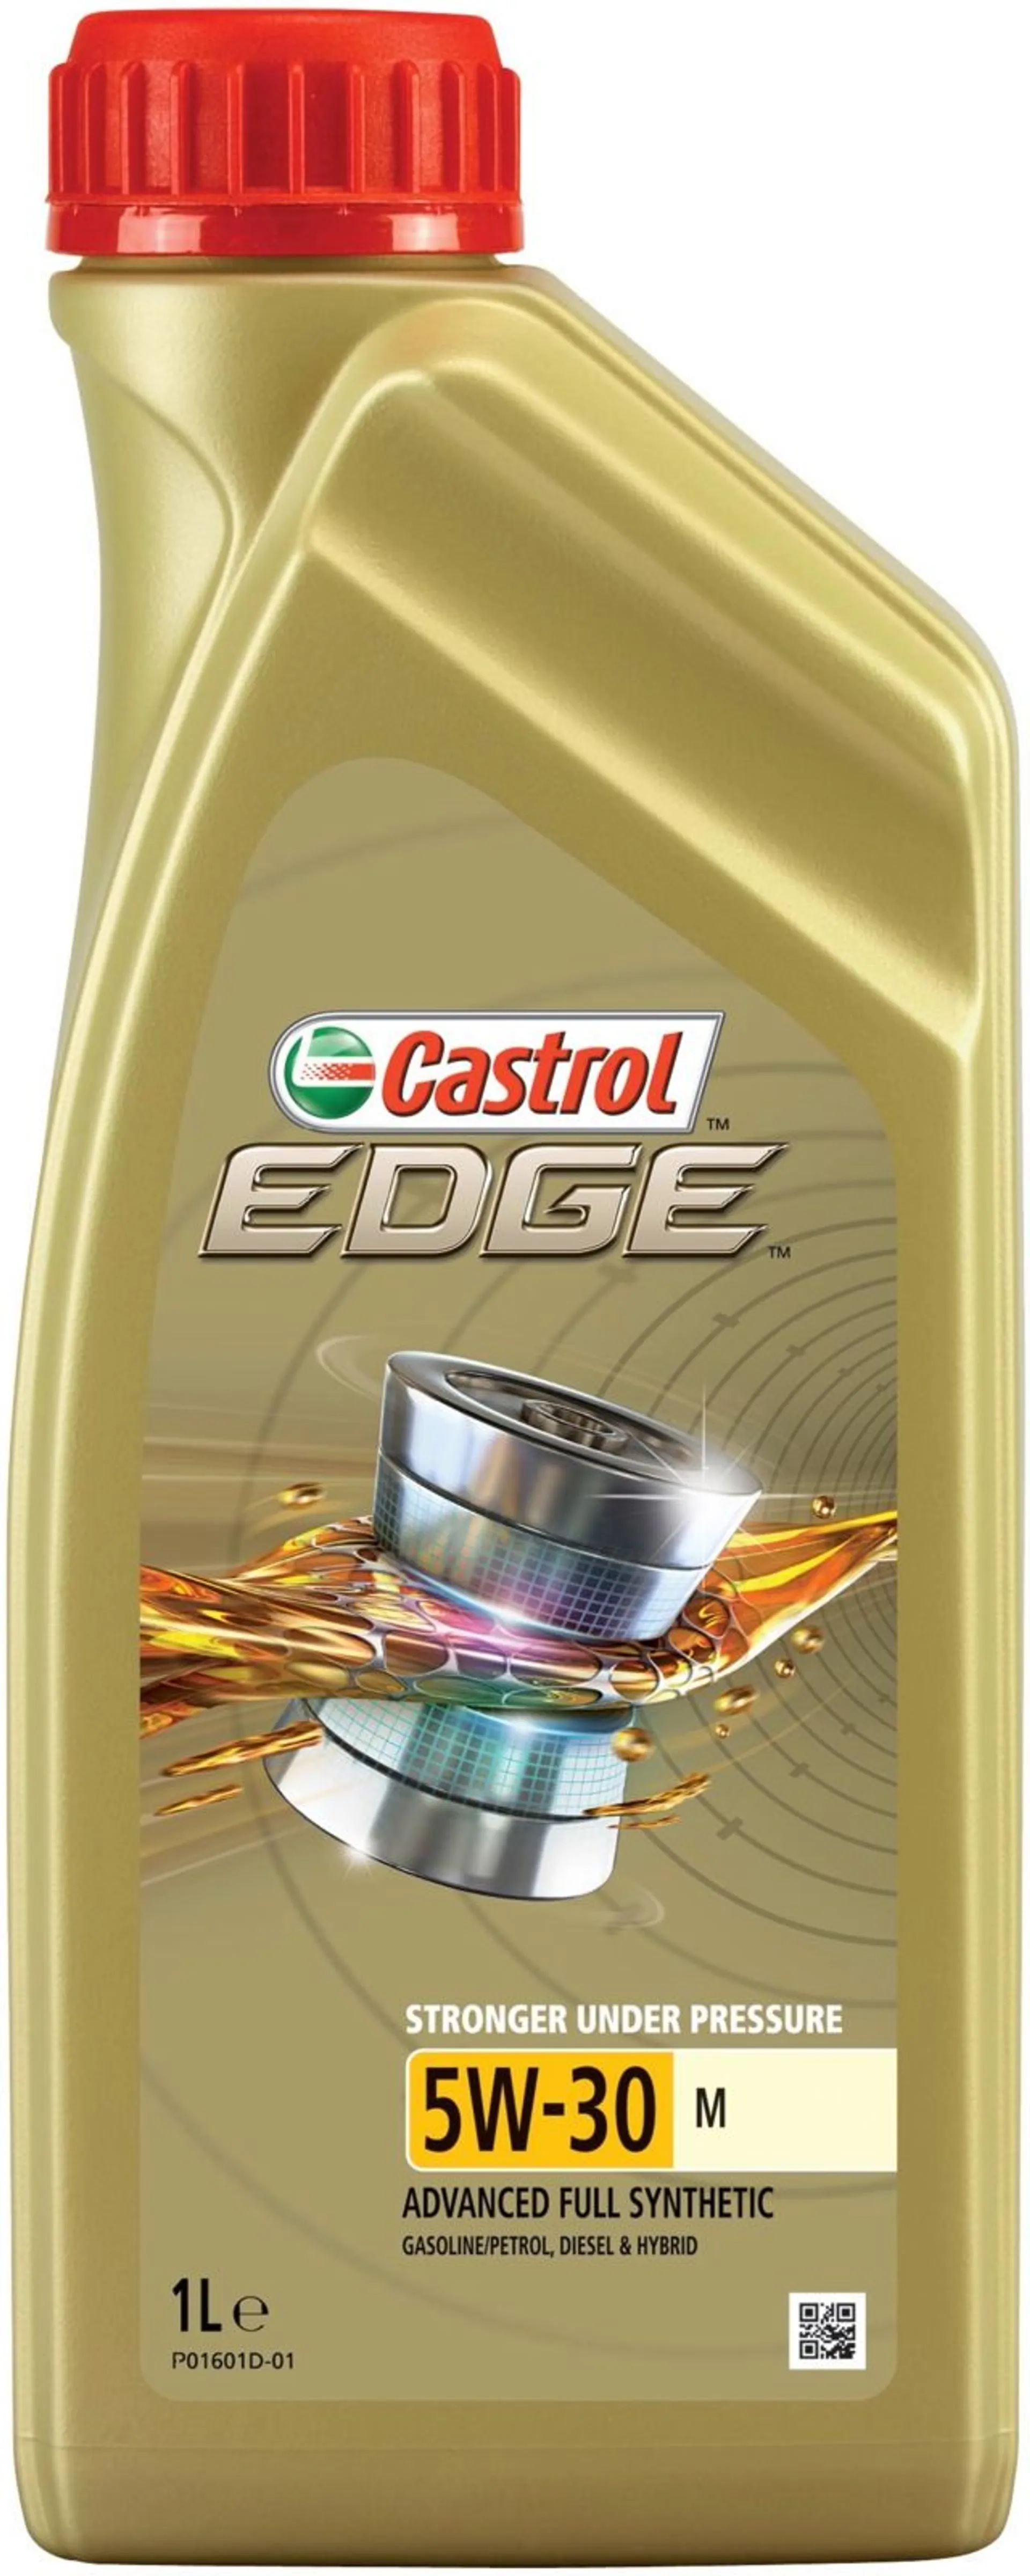 Castrol Edge 5W-30 M moottoriöljy 1L